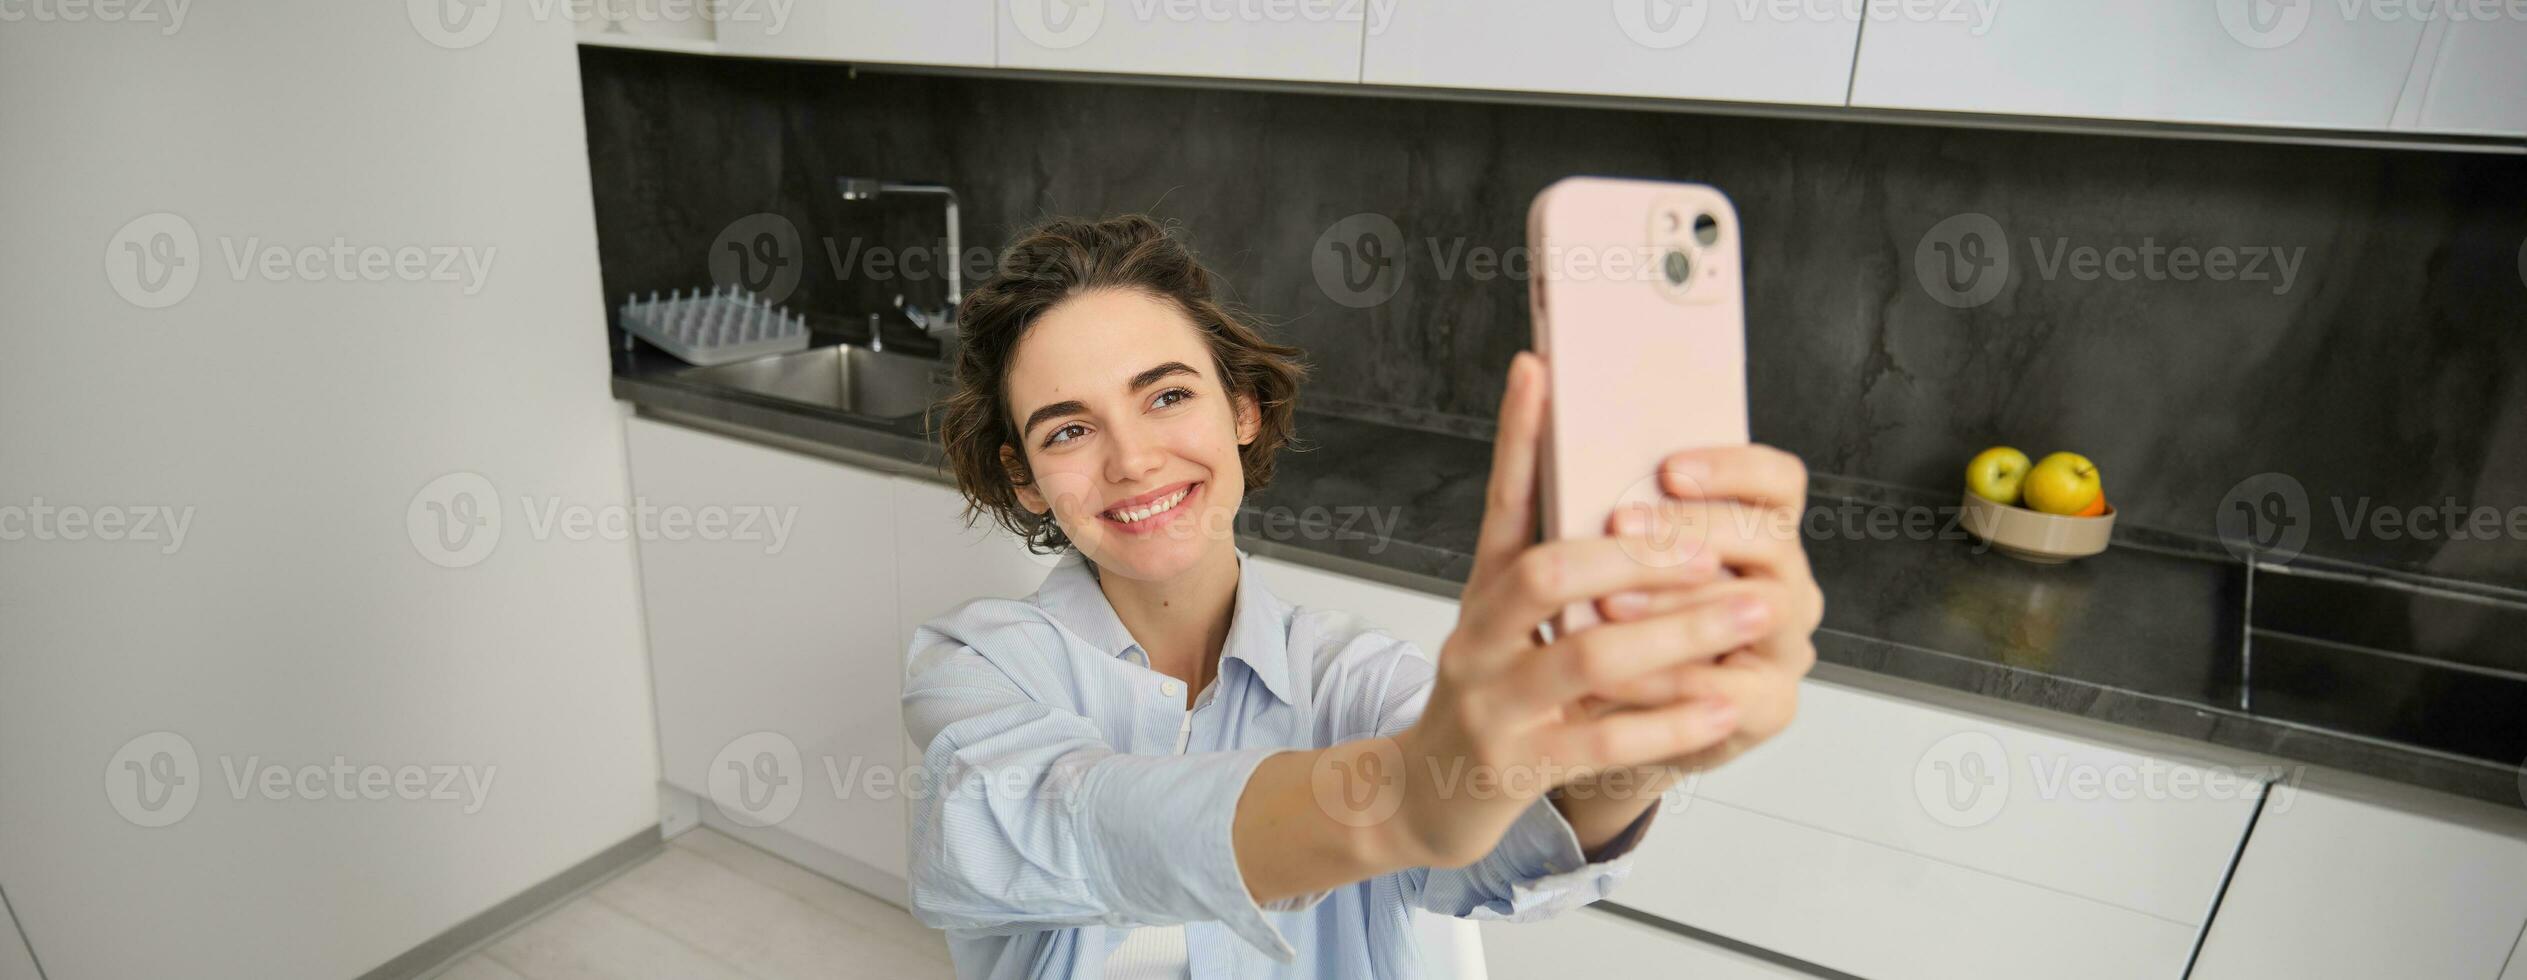 elegante sonriente niña toma selfie en teléfono inteligente a hogar, hace foto de sí misma en cocina, poses para imagen con móvil teléfono